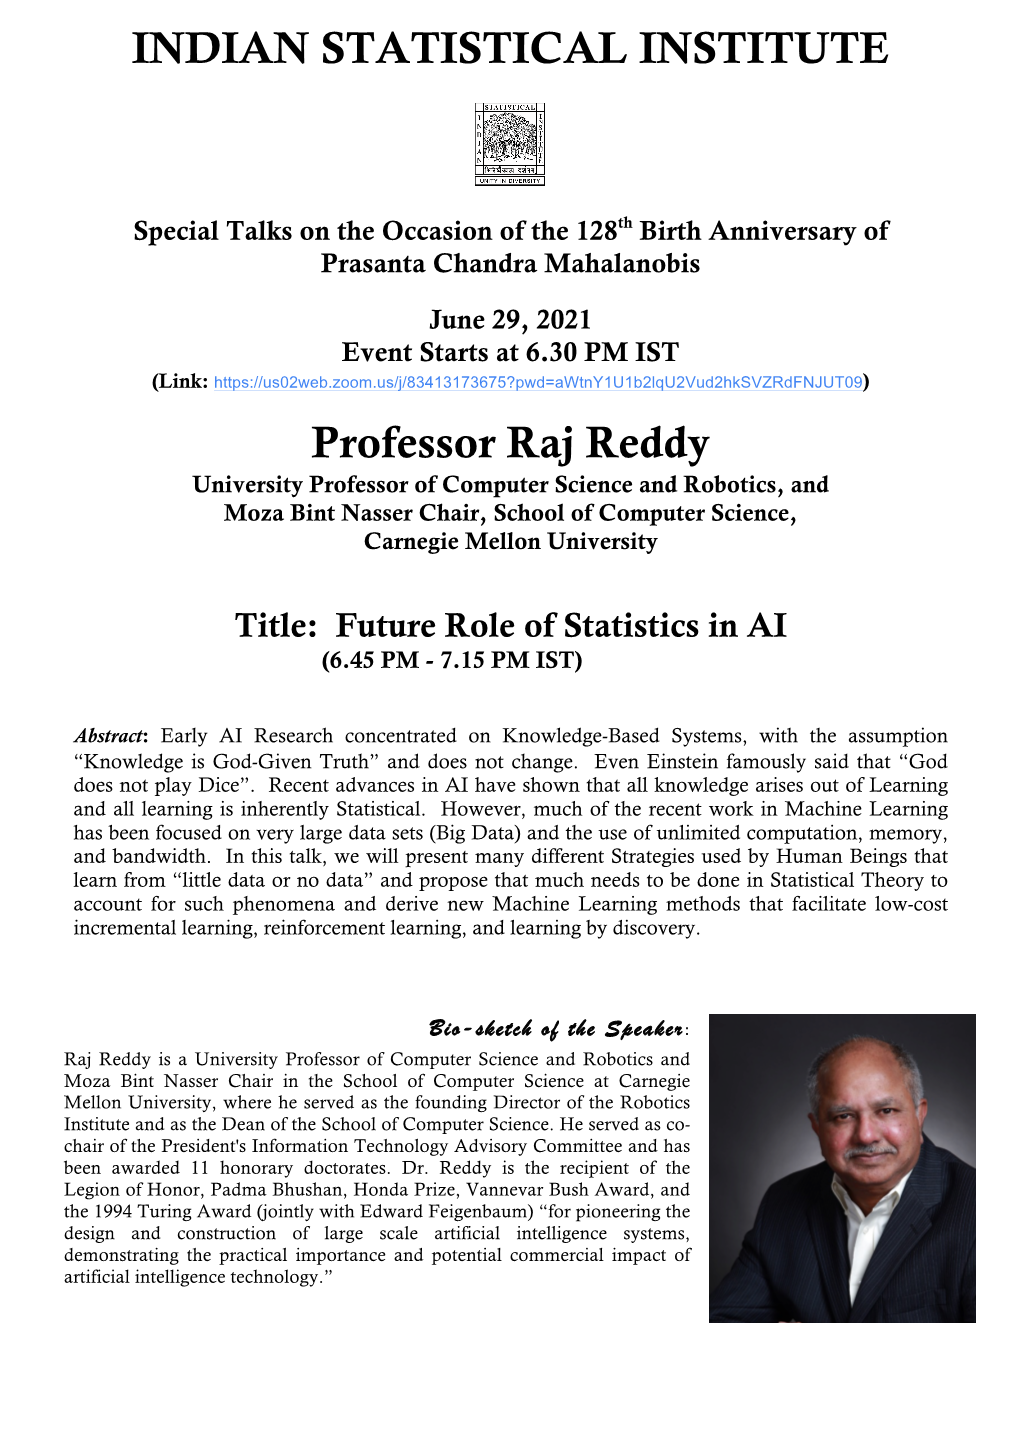 INDIAN STATISTICAL INSTITUTE Professor Raj Reddy